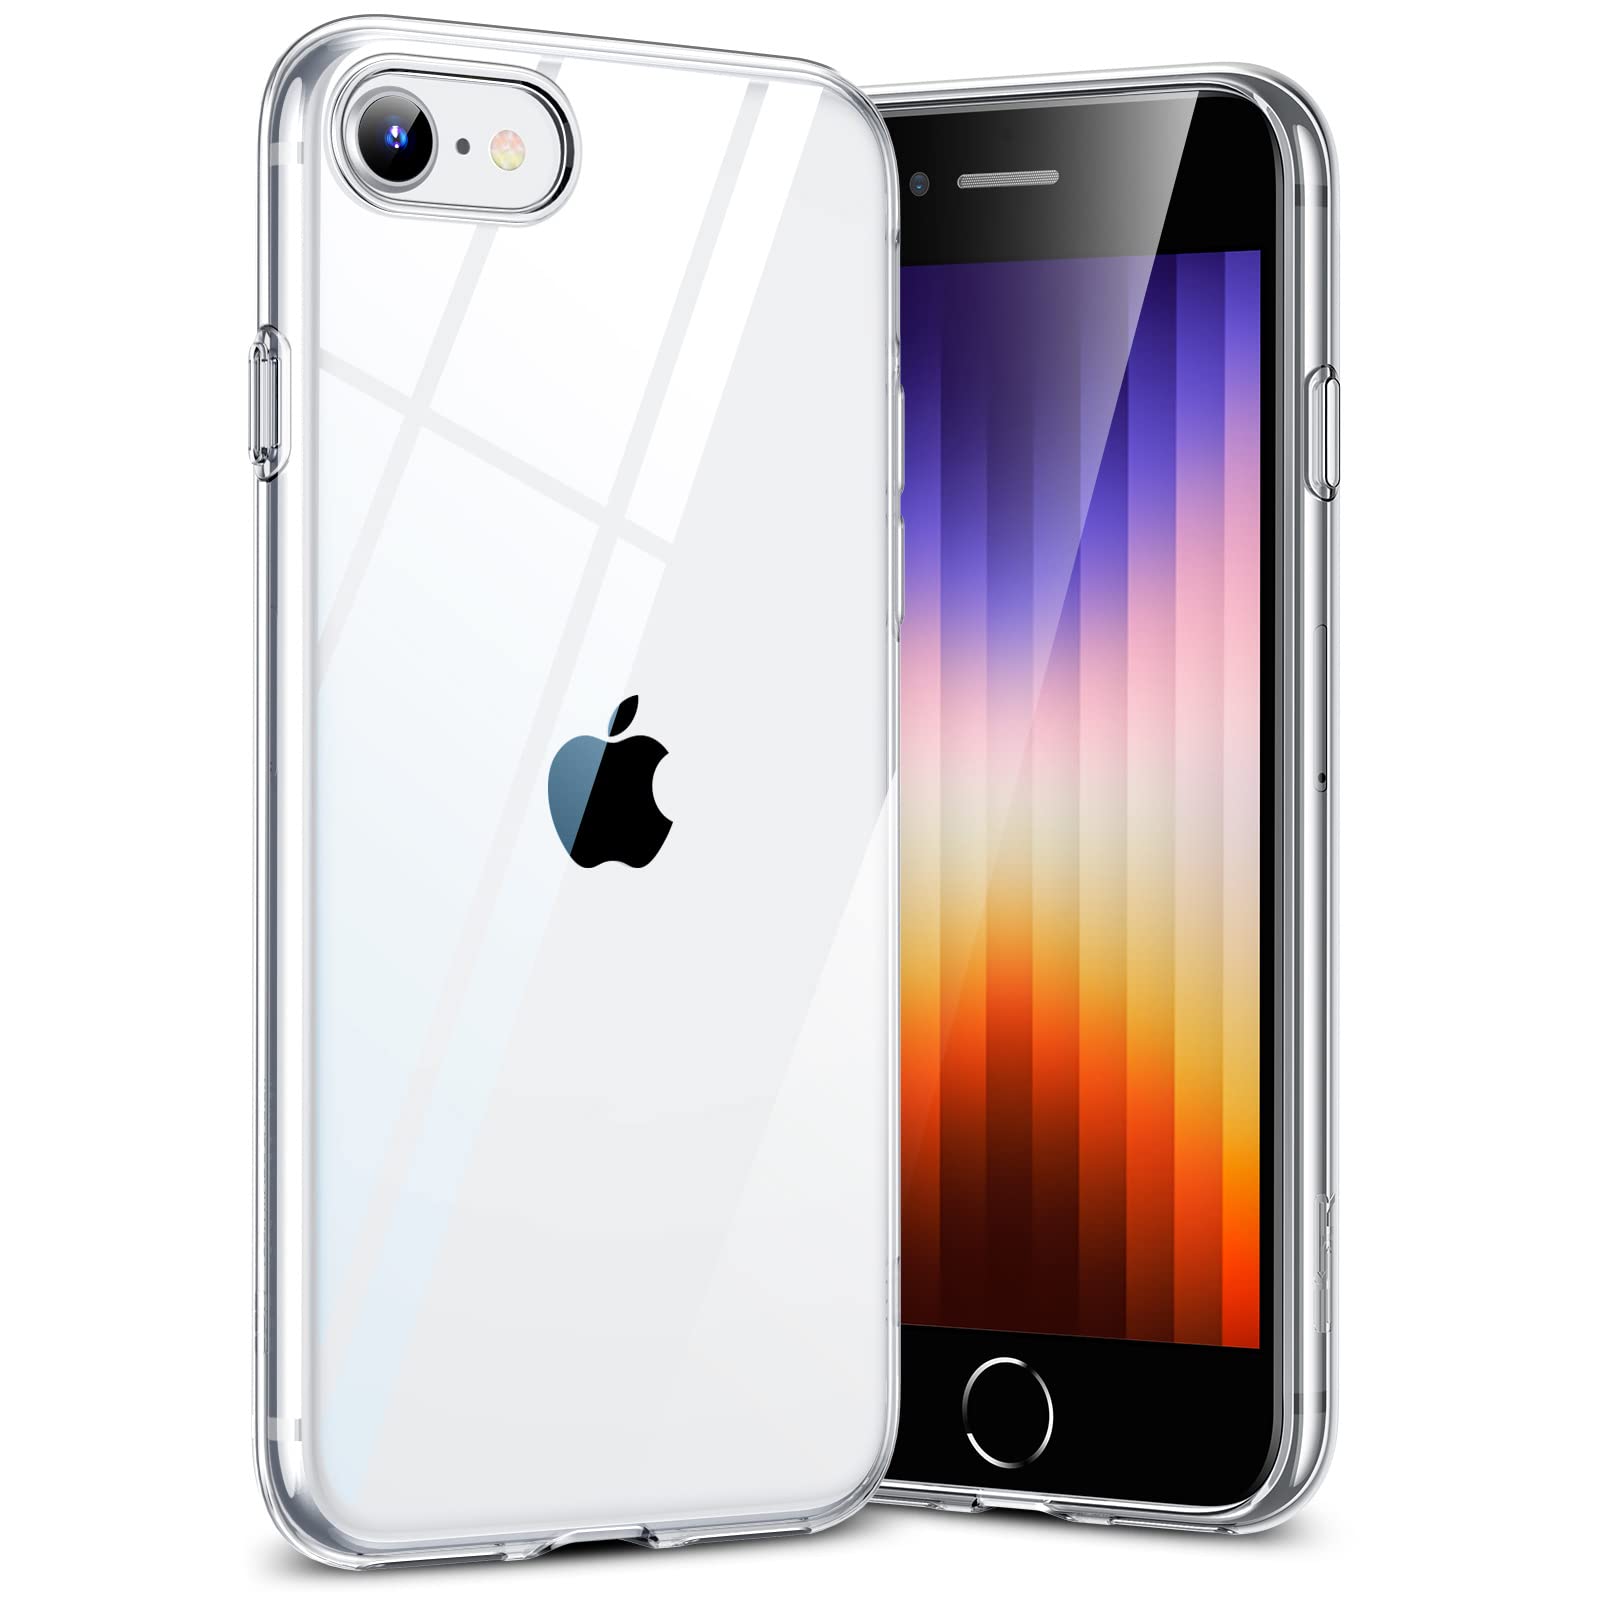 EPICO TWIGGY GLOSS CASE iPhone 6/6S Plus - white
transparent